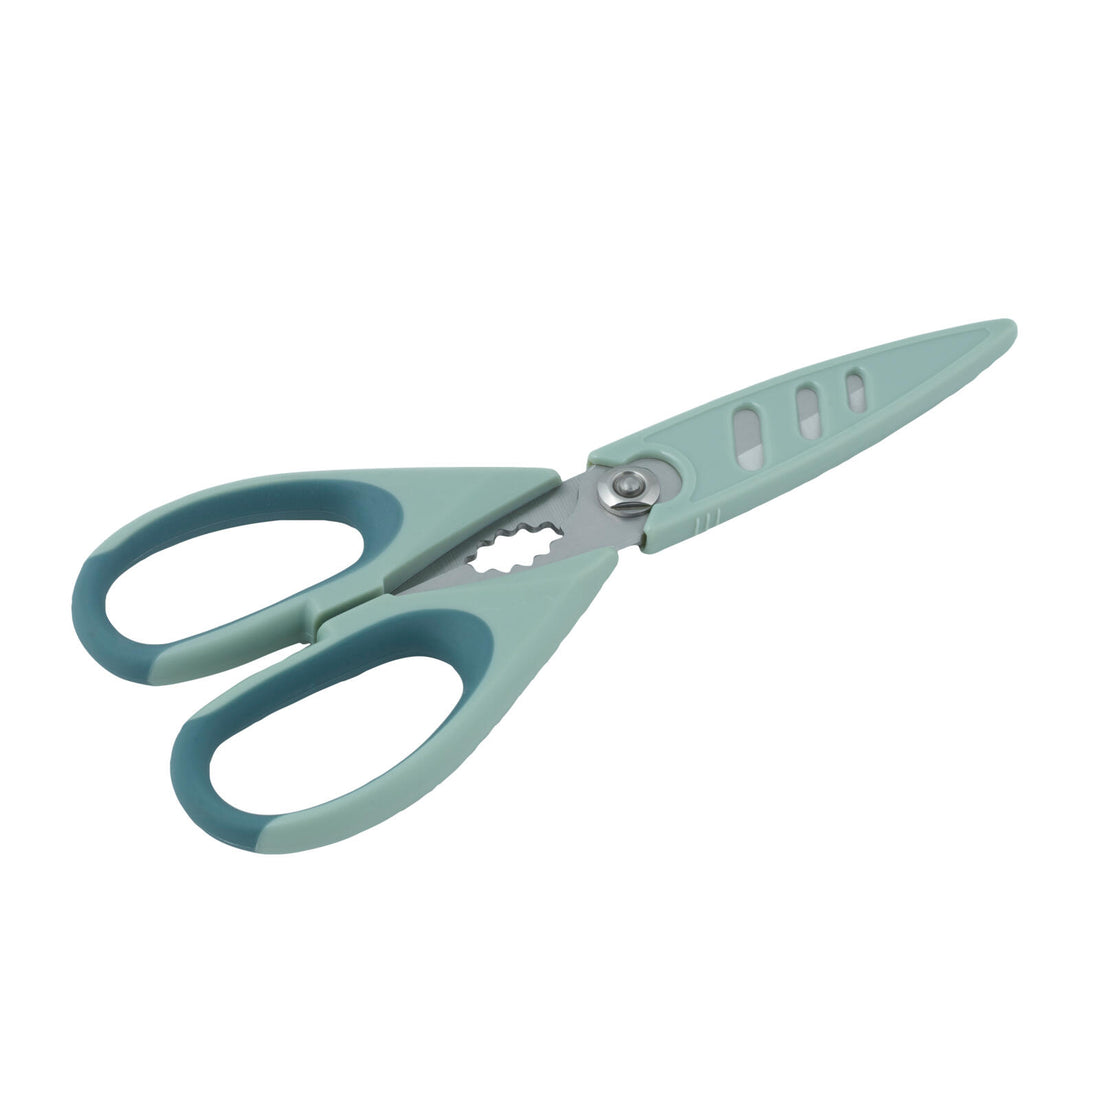 CUISINO Mint scissors, L 22 x D 2.5 cm